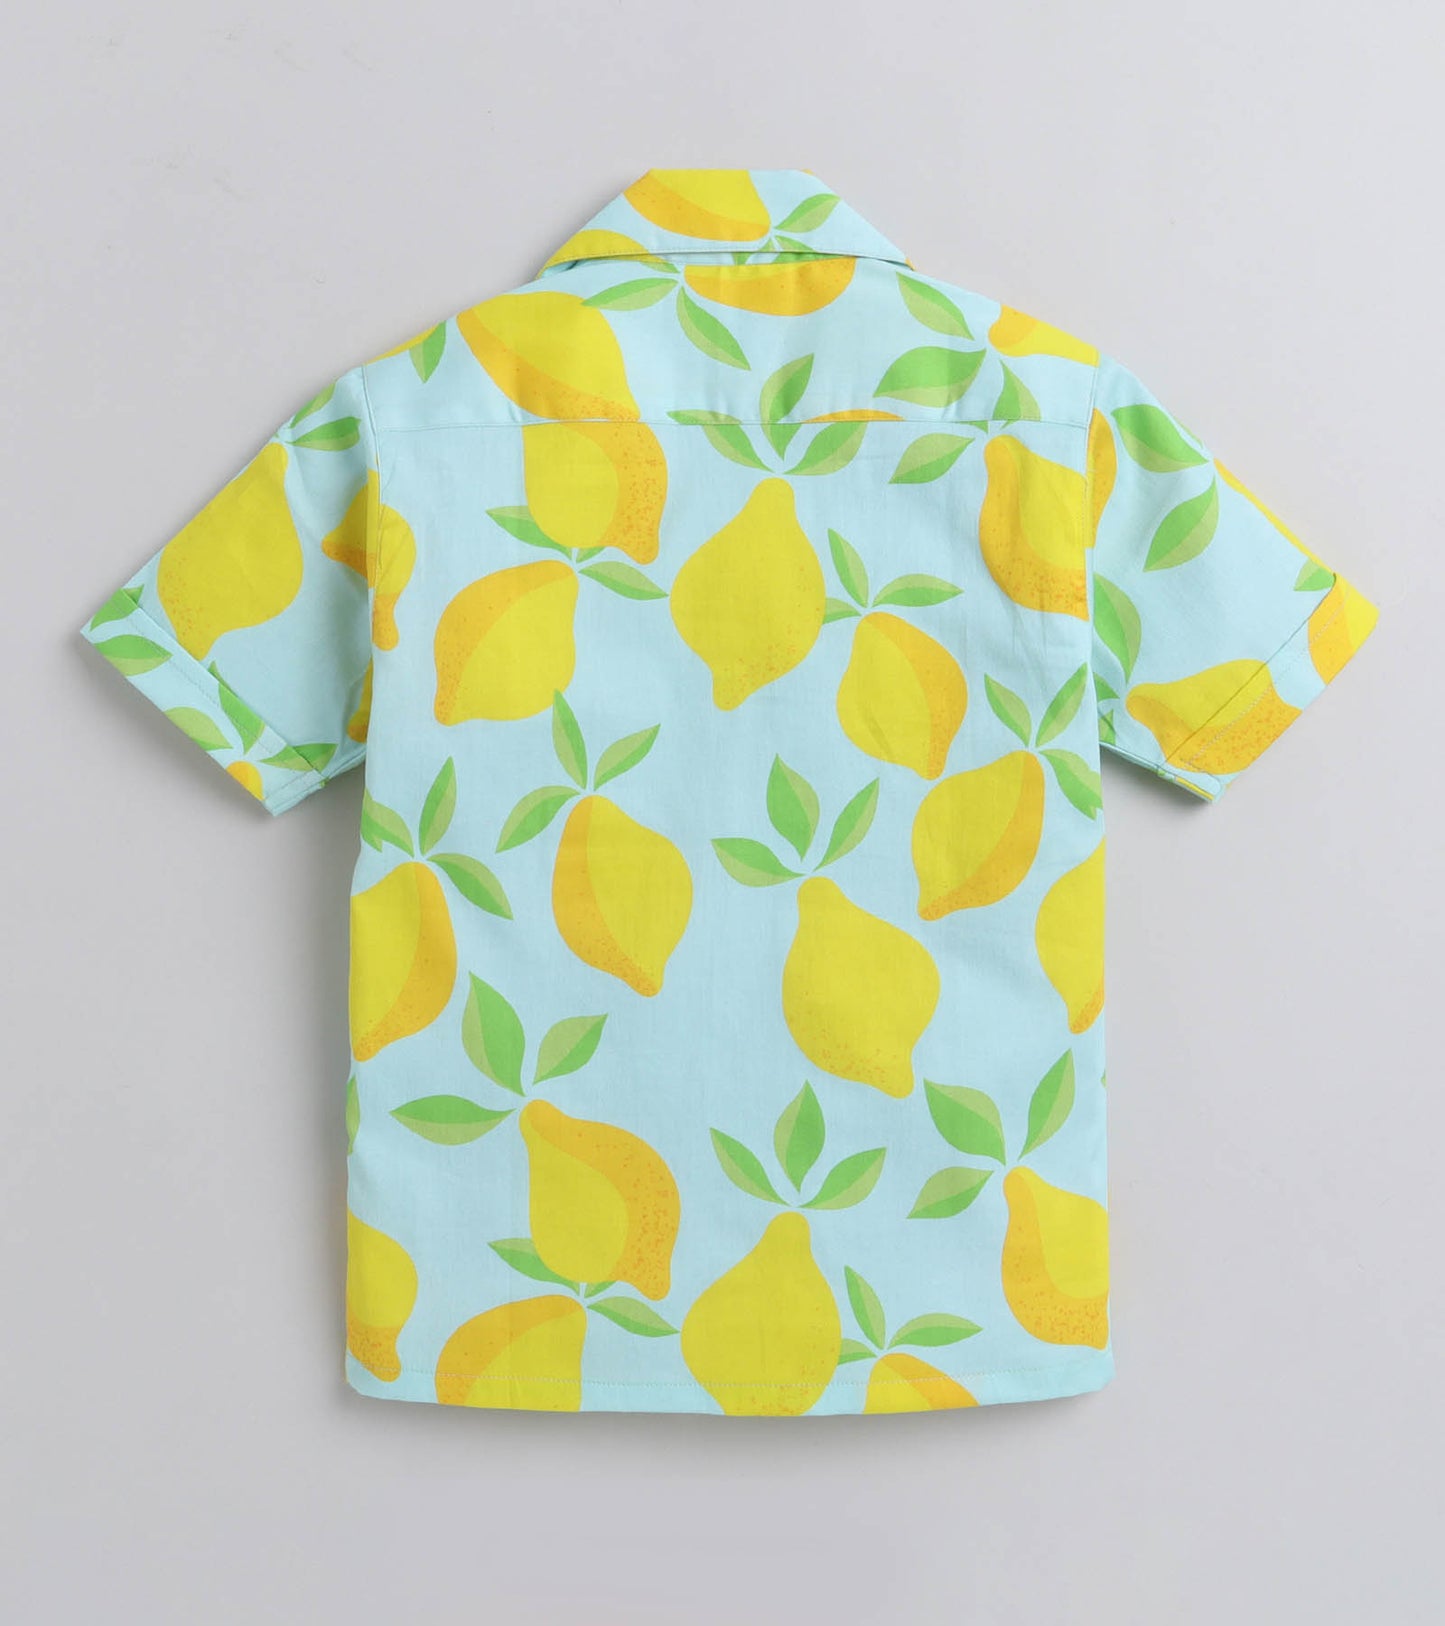 Lemony Digital printed Boys Shirt